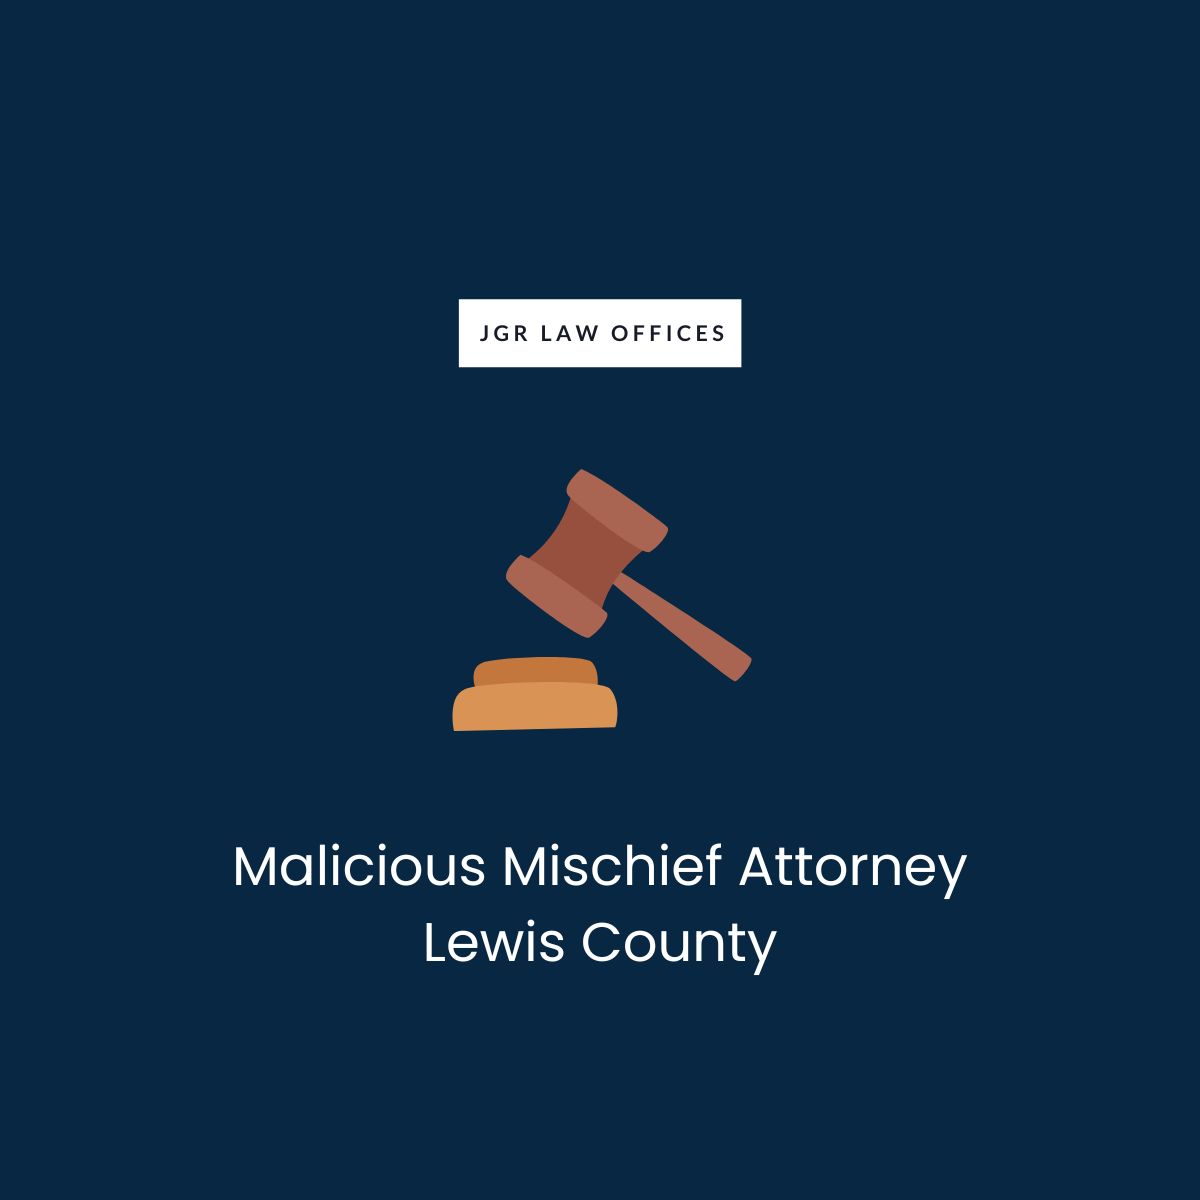 Malicious Mischief Attorney Lewis County